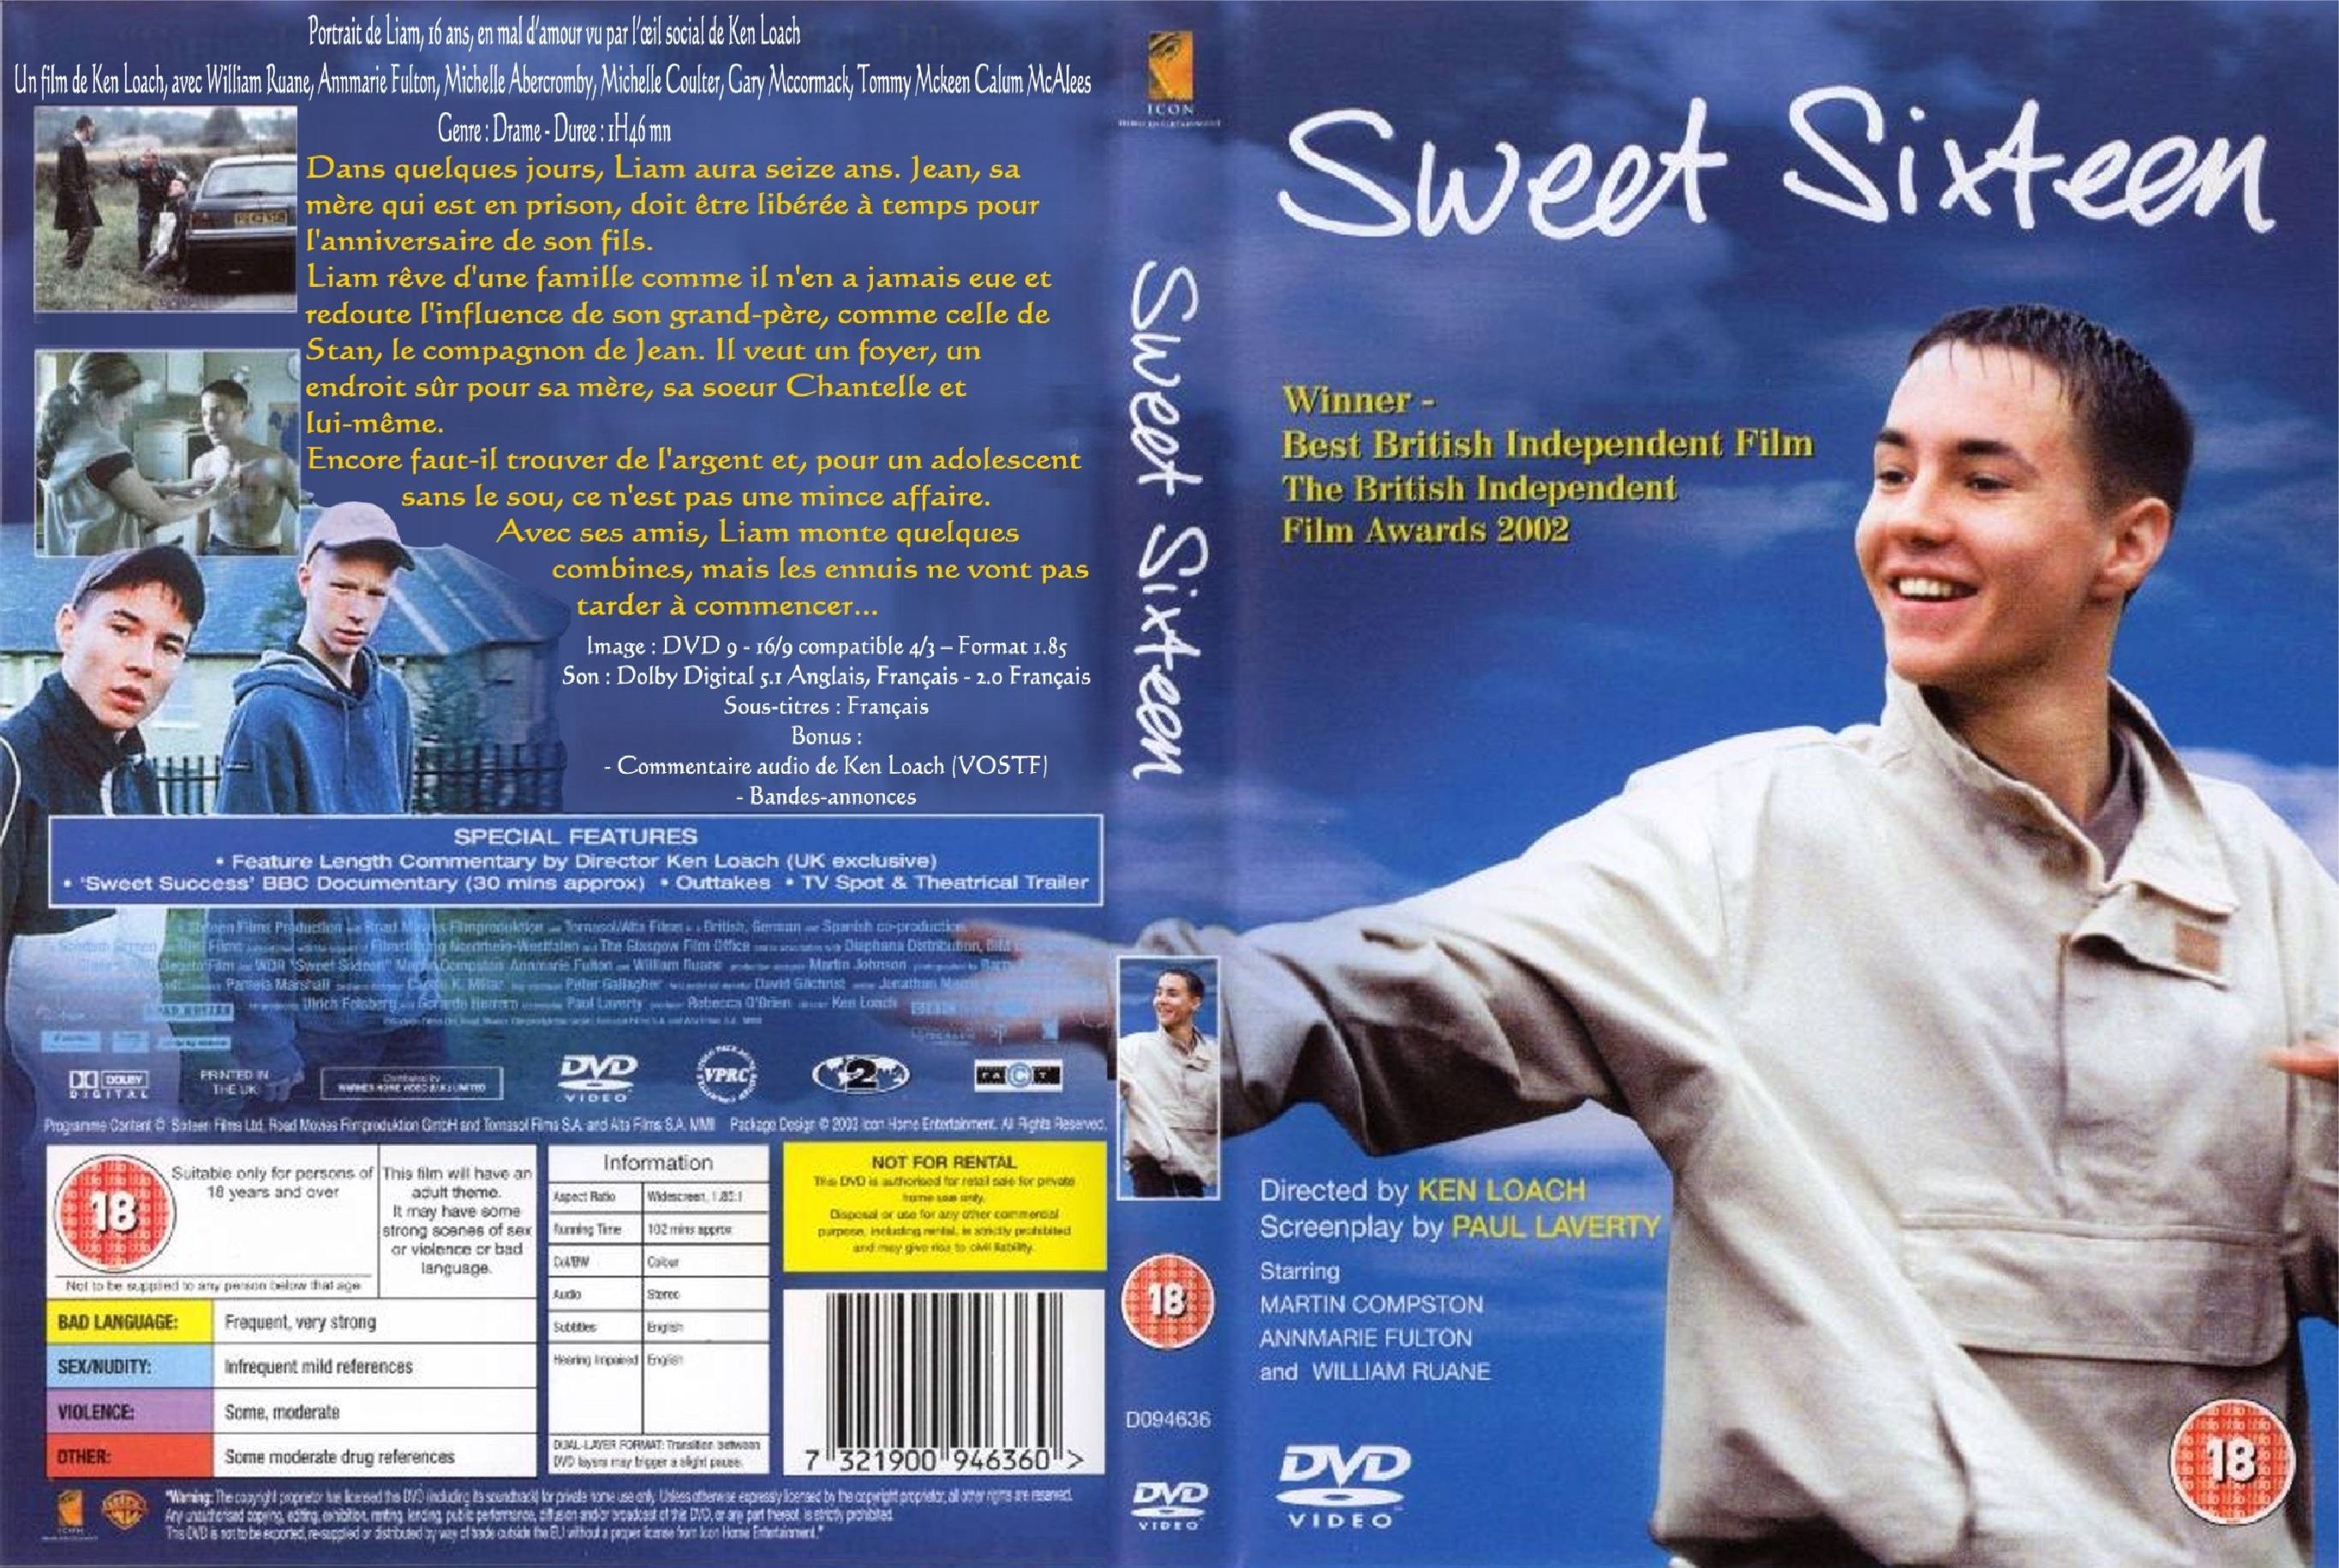 Jaquette DVD Sweet sisteen custom